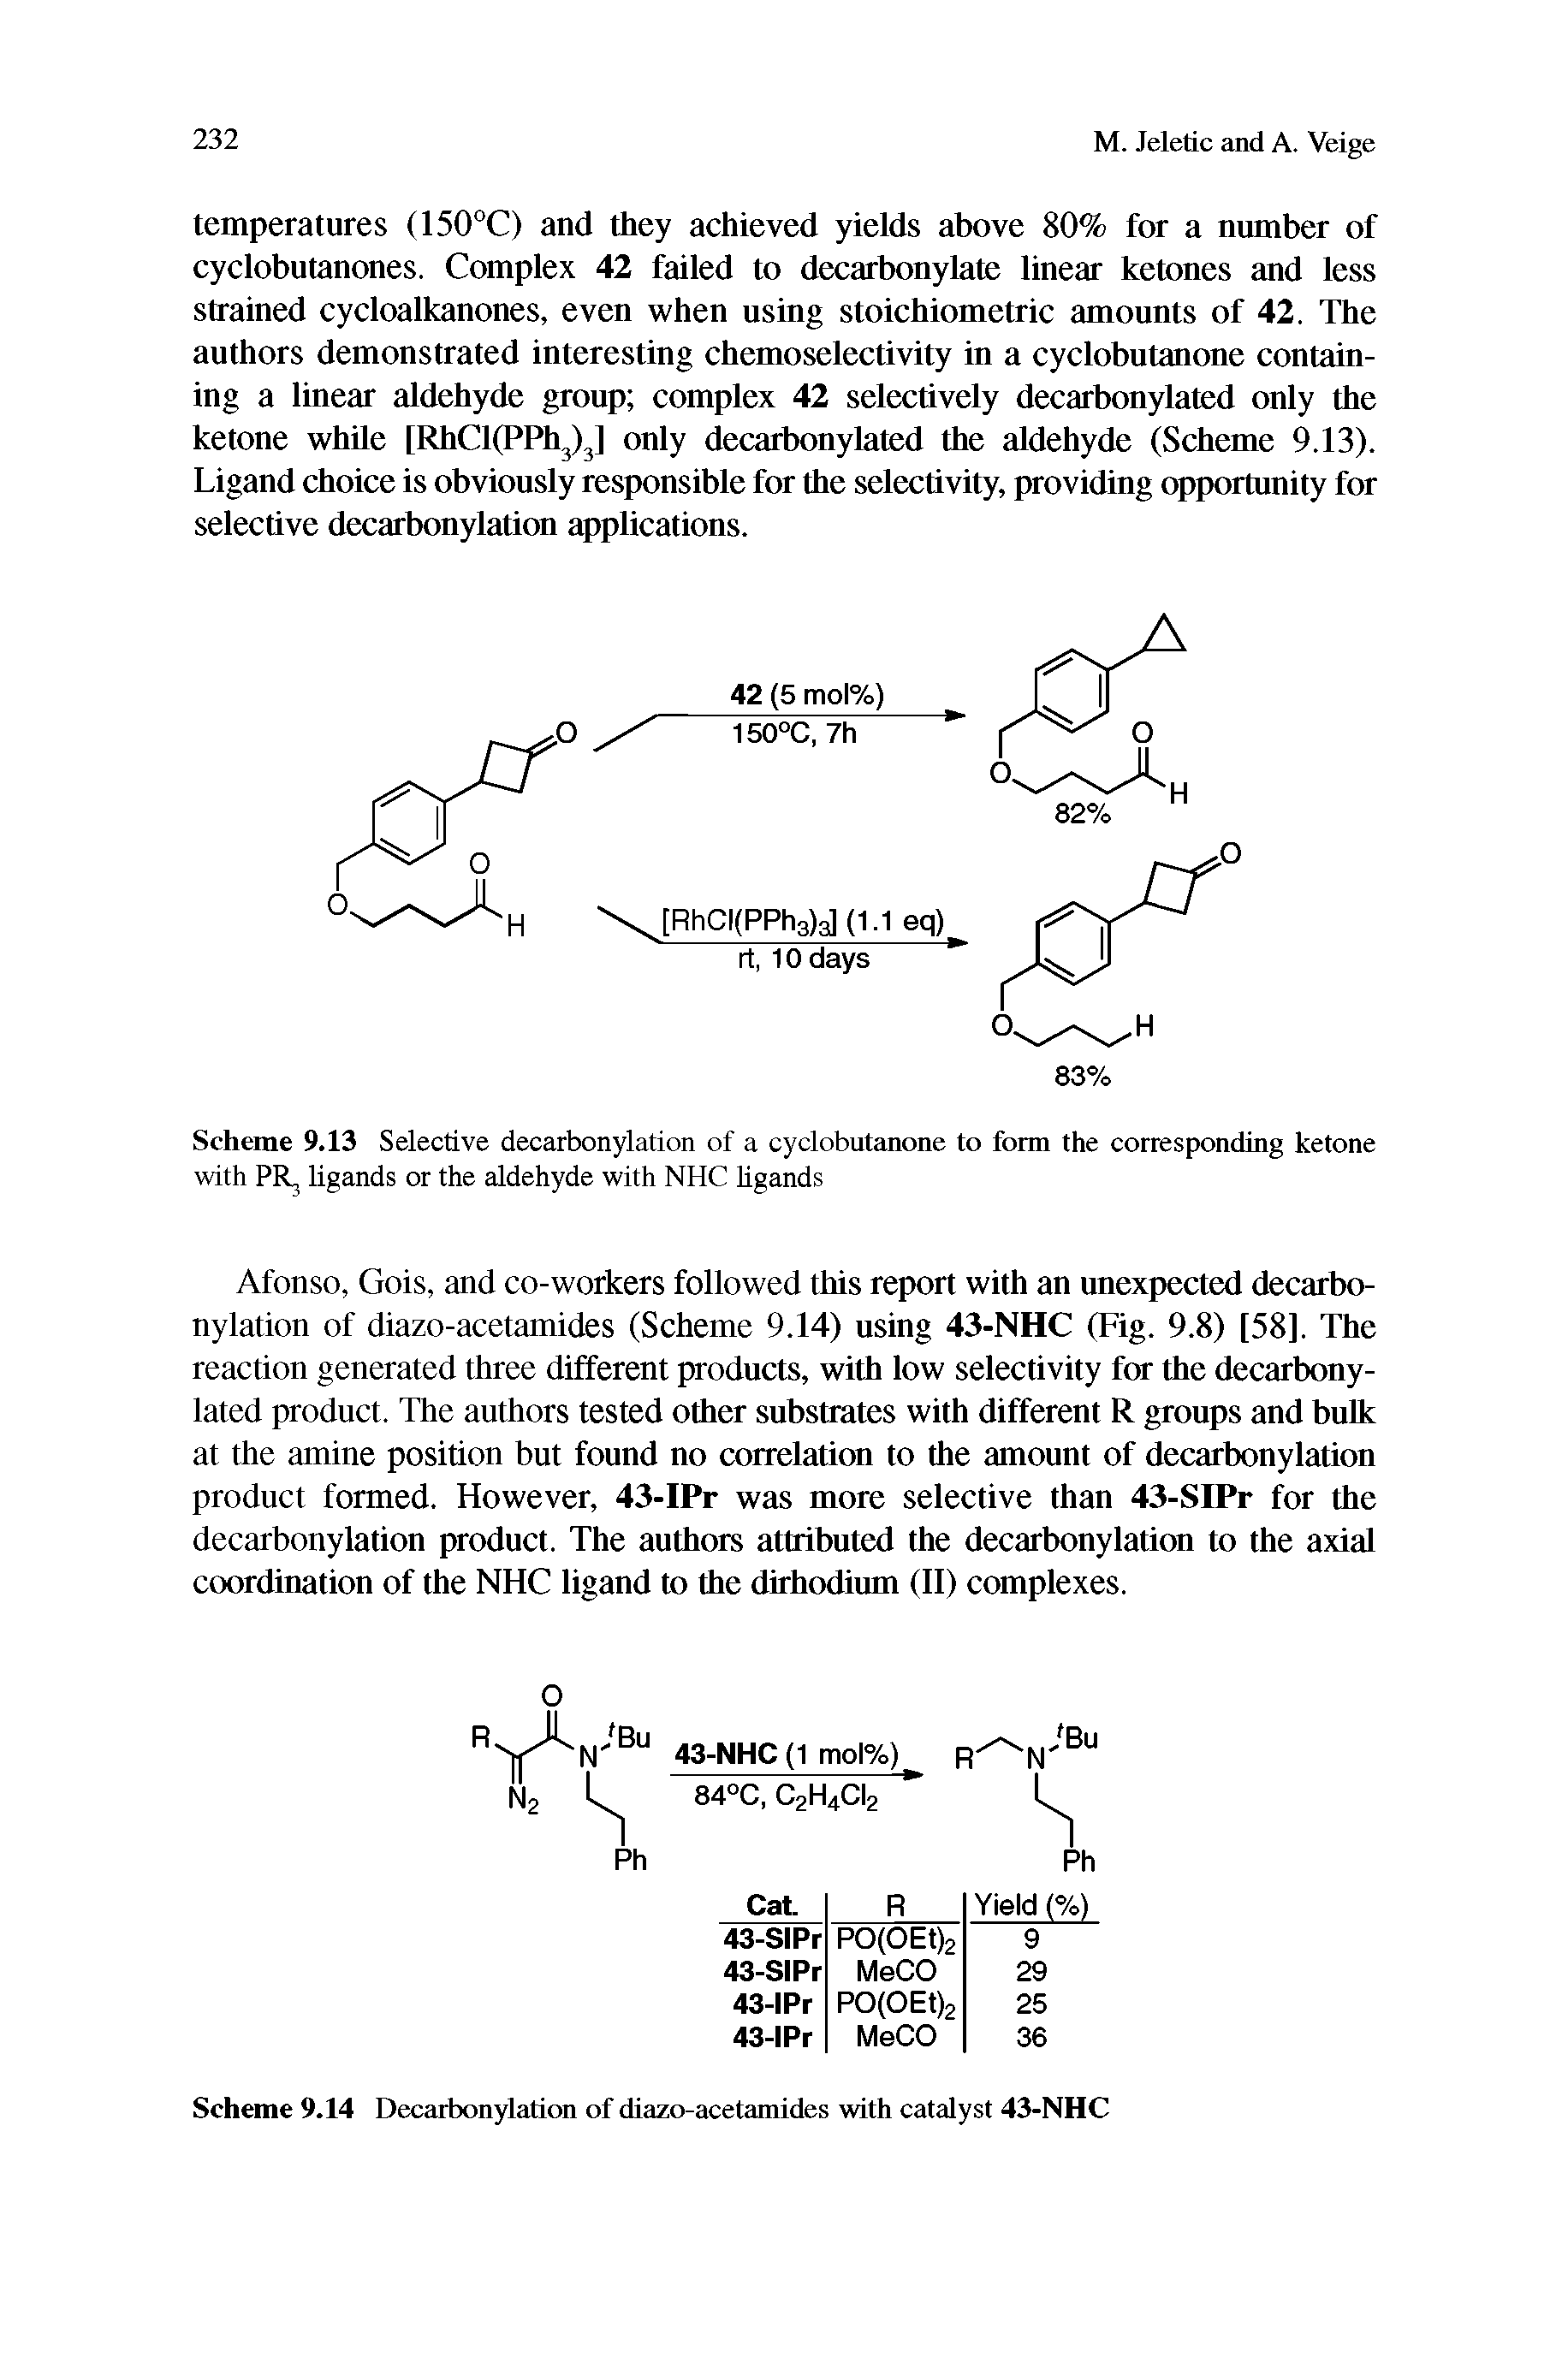 Scheme 9.14 Decarbonylation of diazo-acetamides with catalyst 43-NHC...